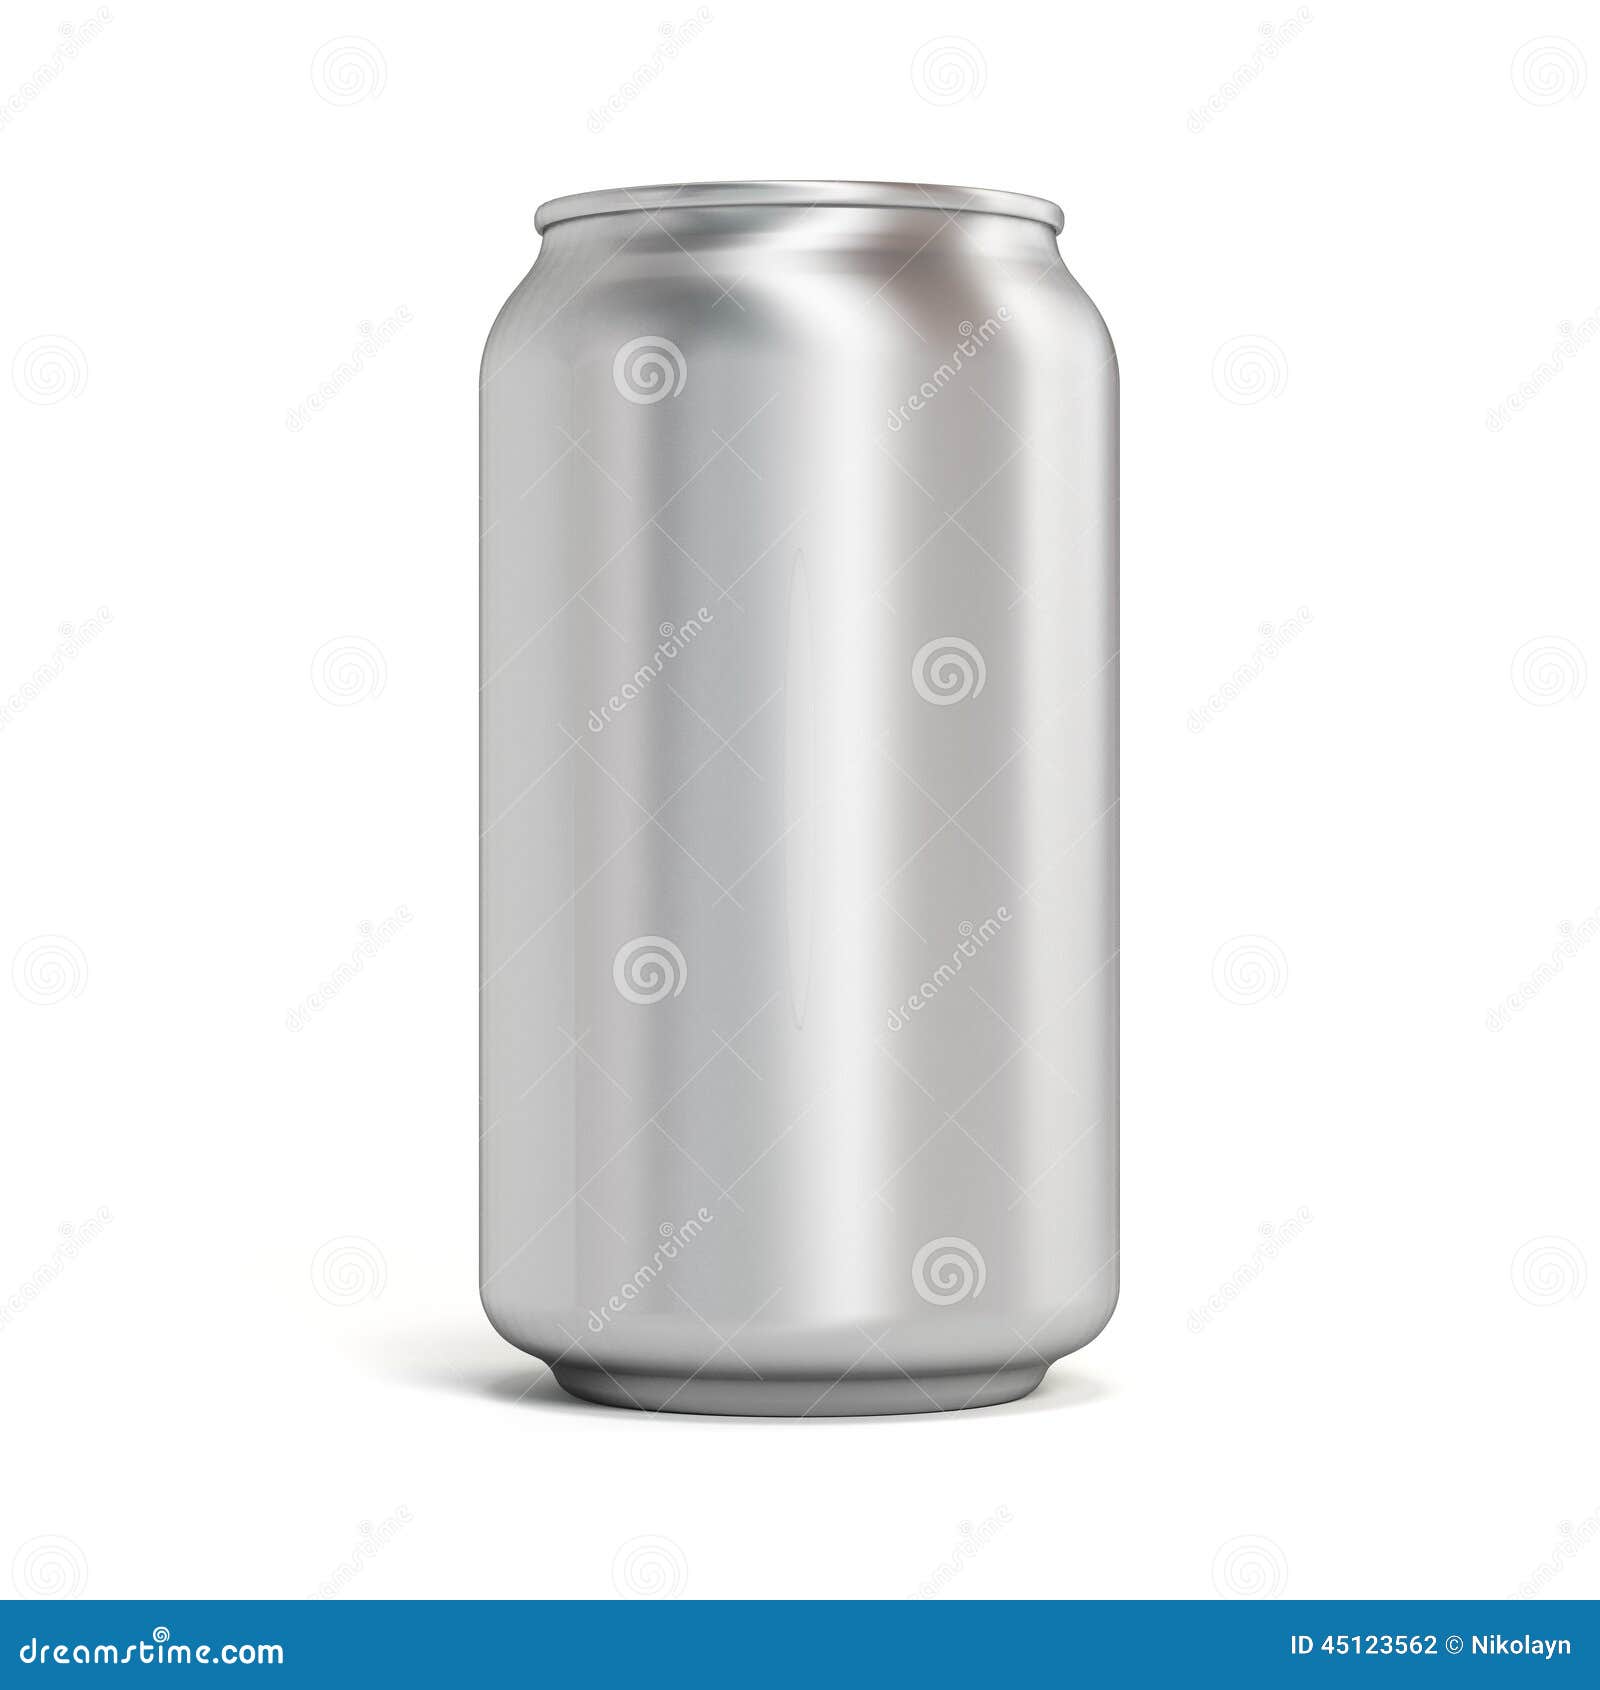 Soda can stock illustration. Illustration of shiny, packaging - 45123562